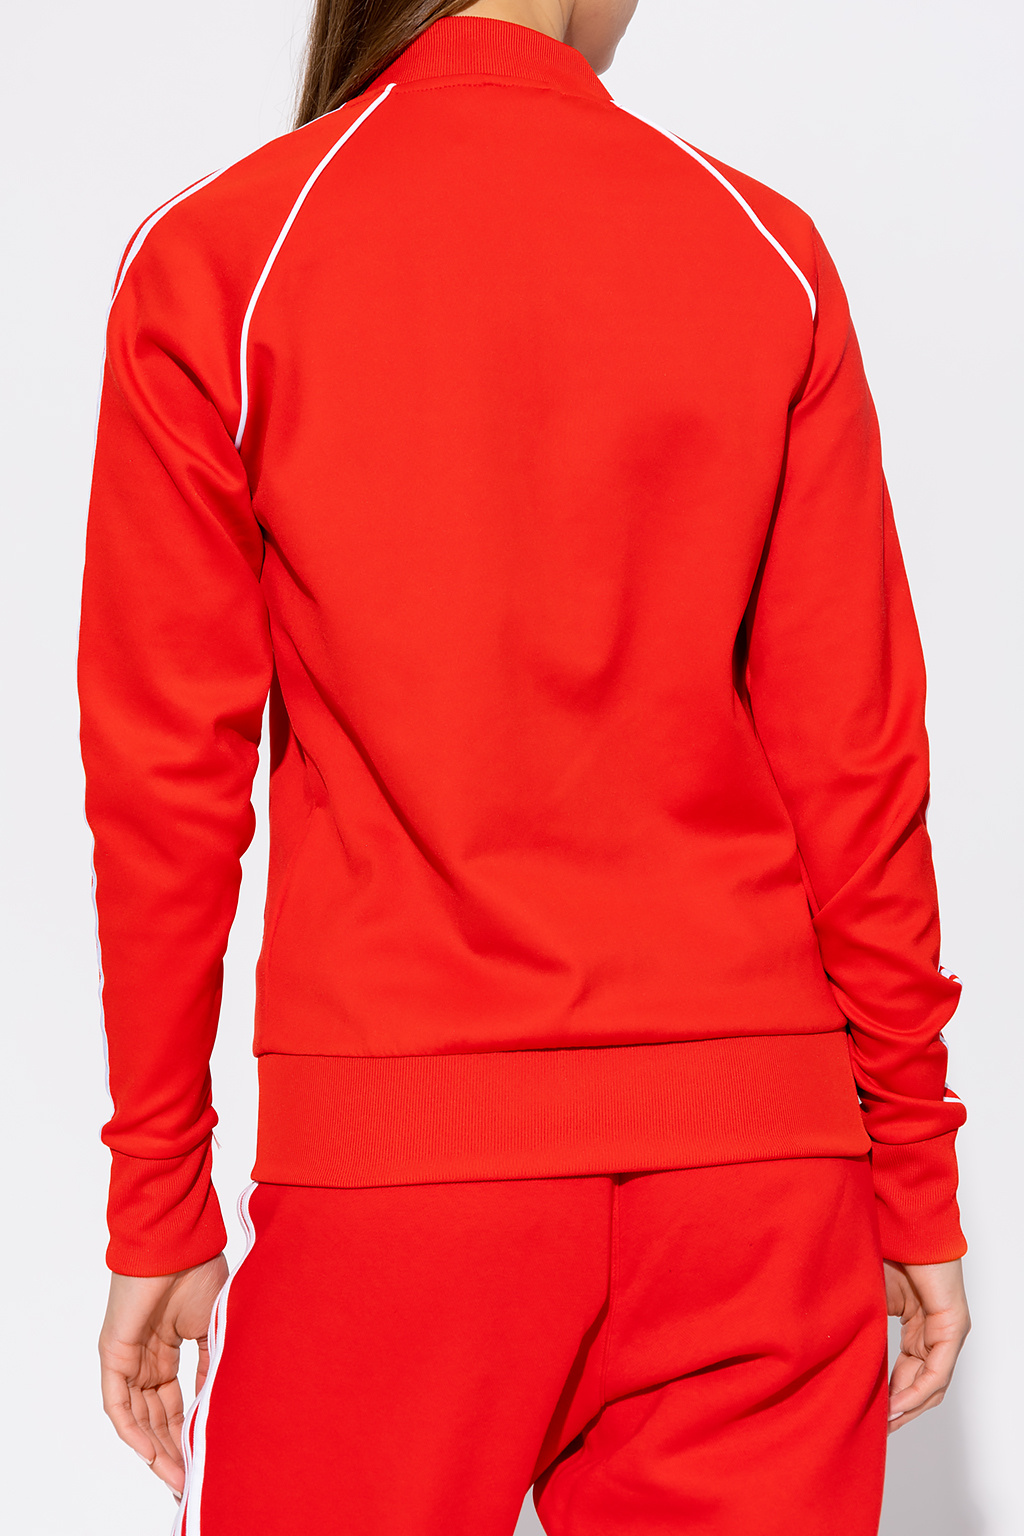 adidas checkout Originals Sweatshirt with standing collar